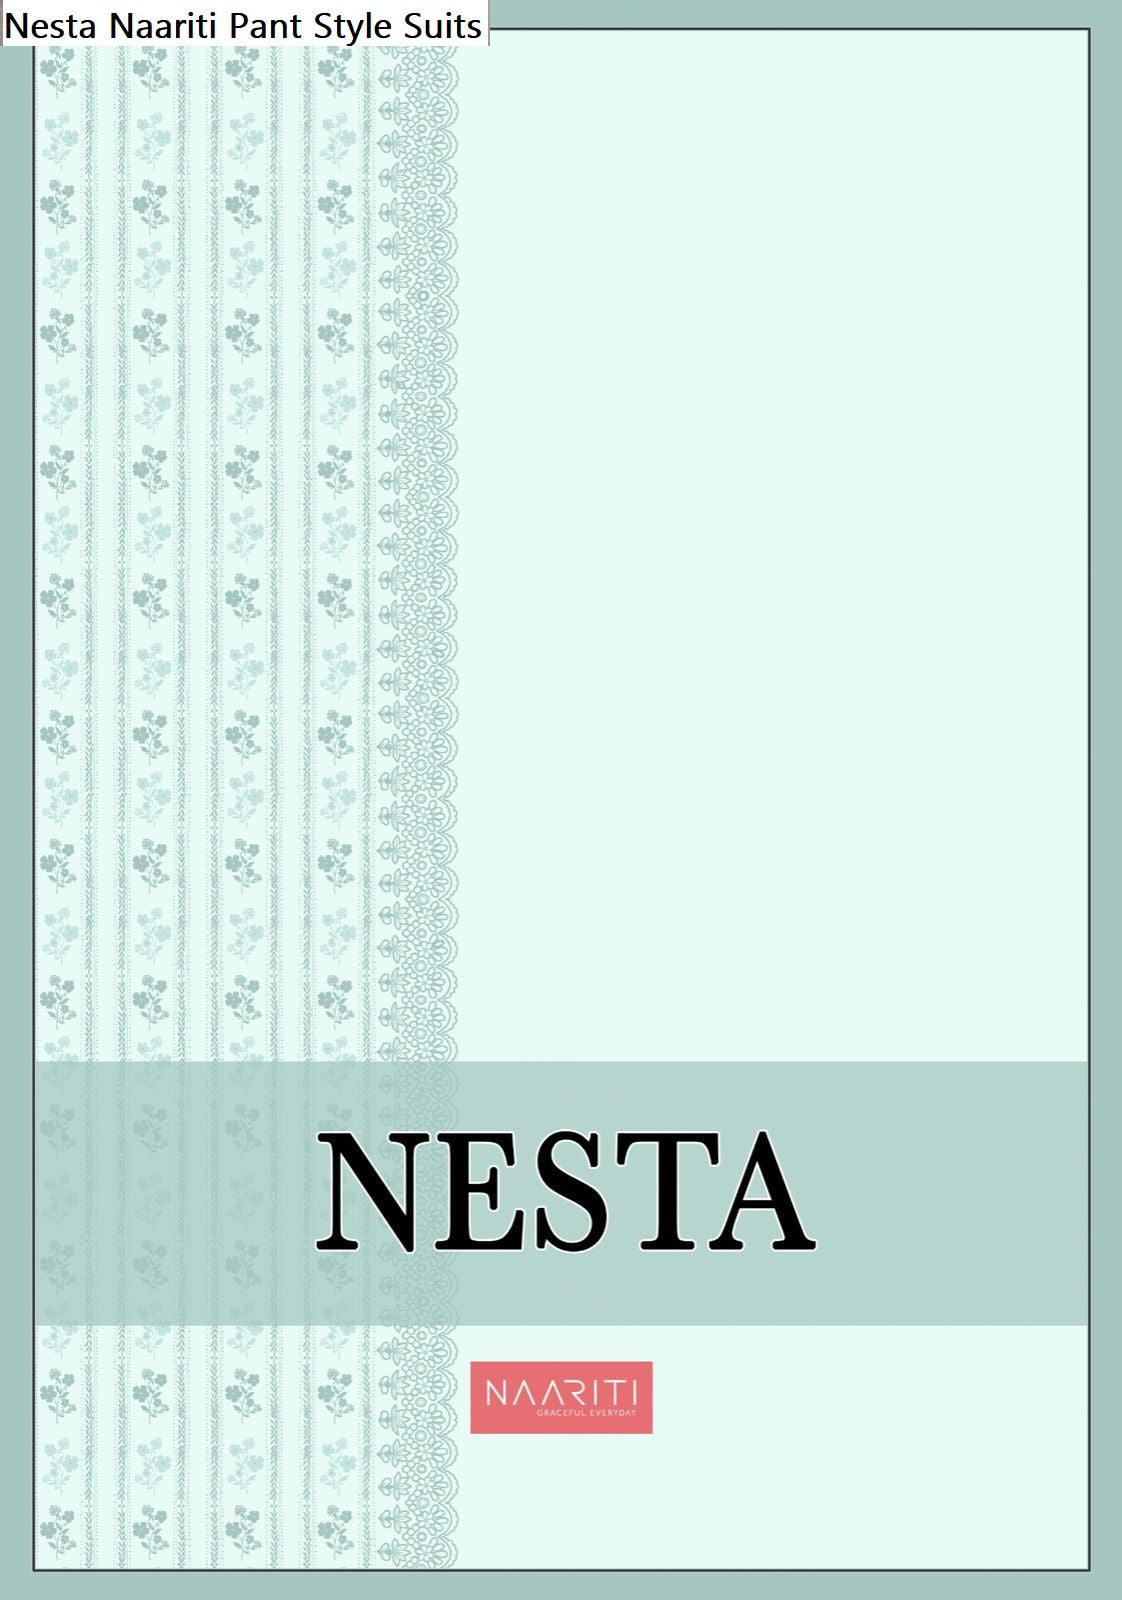 Nesta Naariti Pure Linen Pant Style Suits Supplier